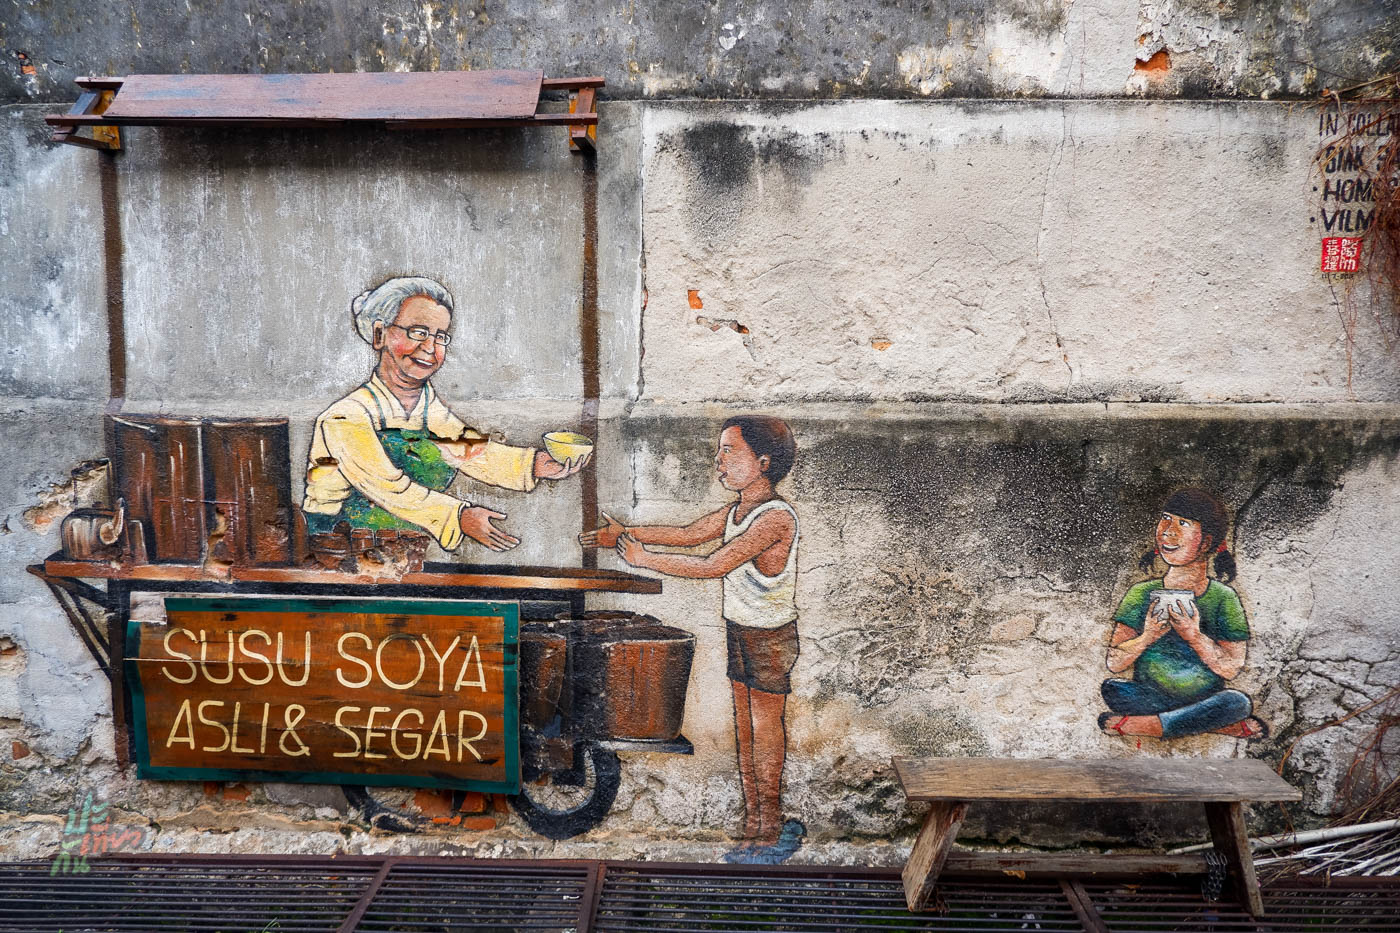 Street Art ยายขายนมถั่วเหลือง (Susu Soya Asli & Segar)